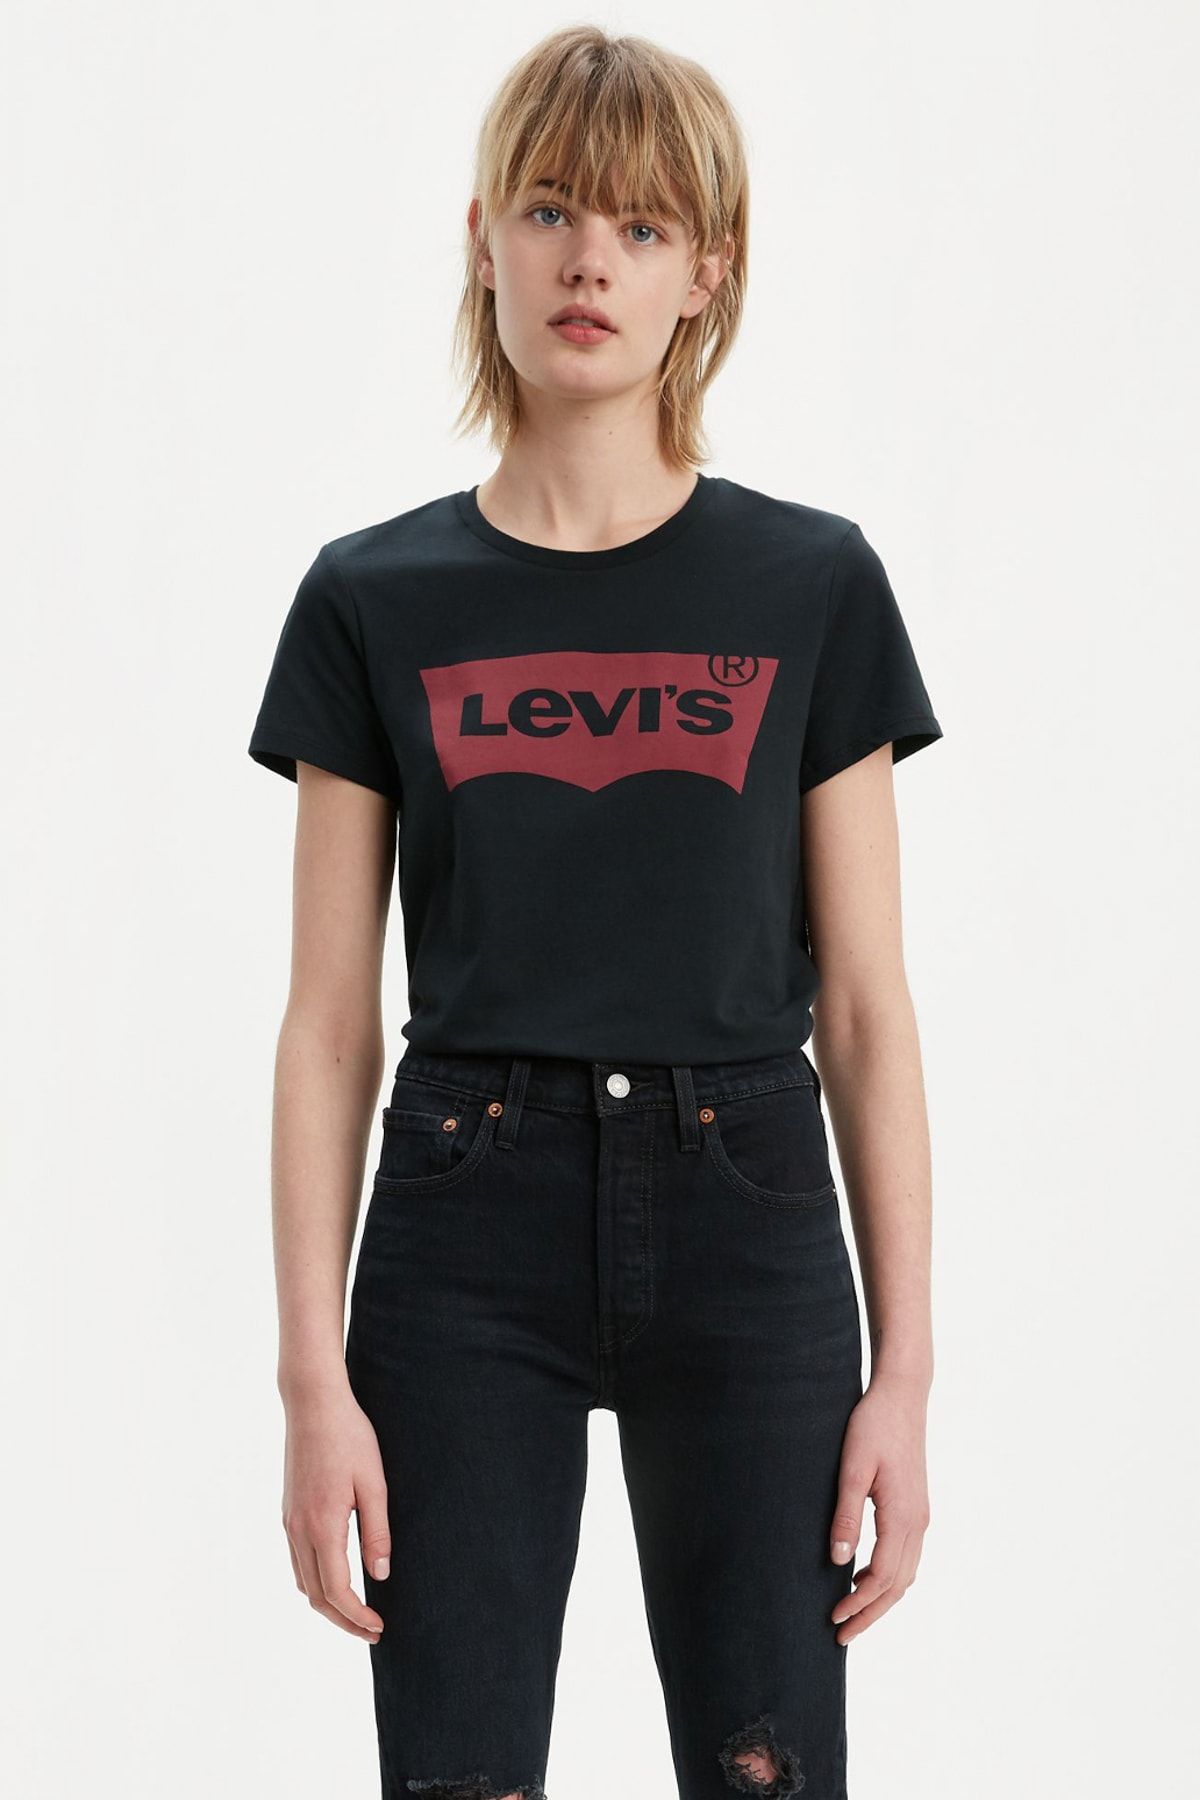 Levi's T-Shirt - Black - Regular fit - Trendyol